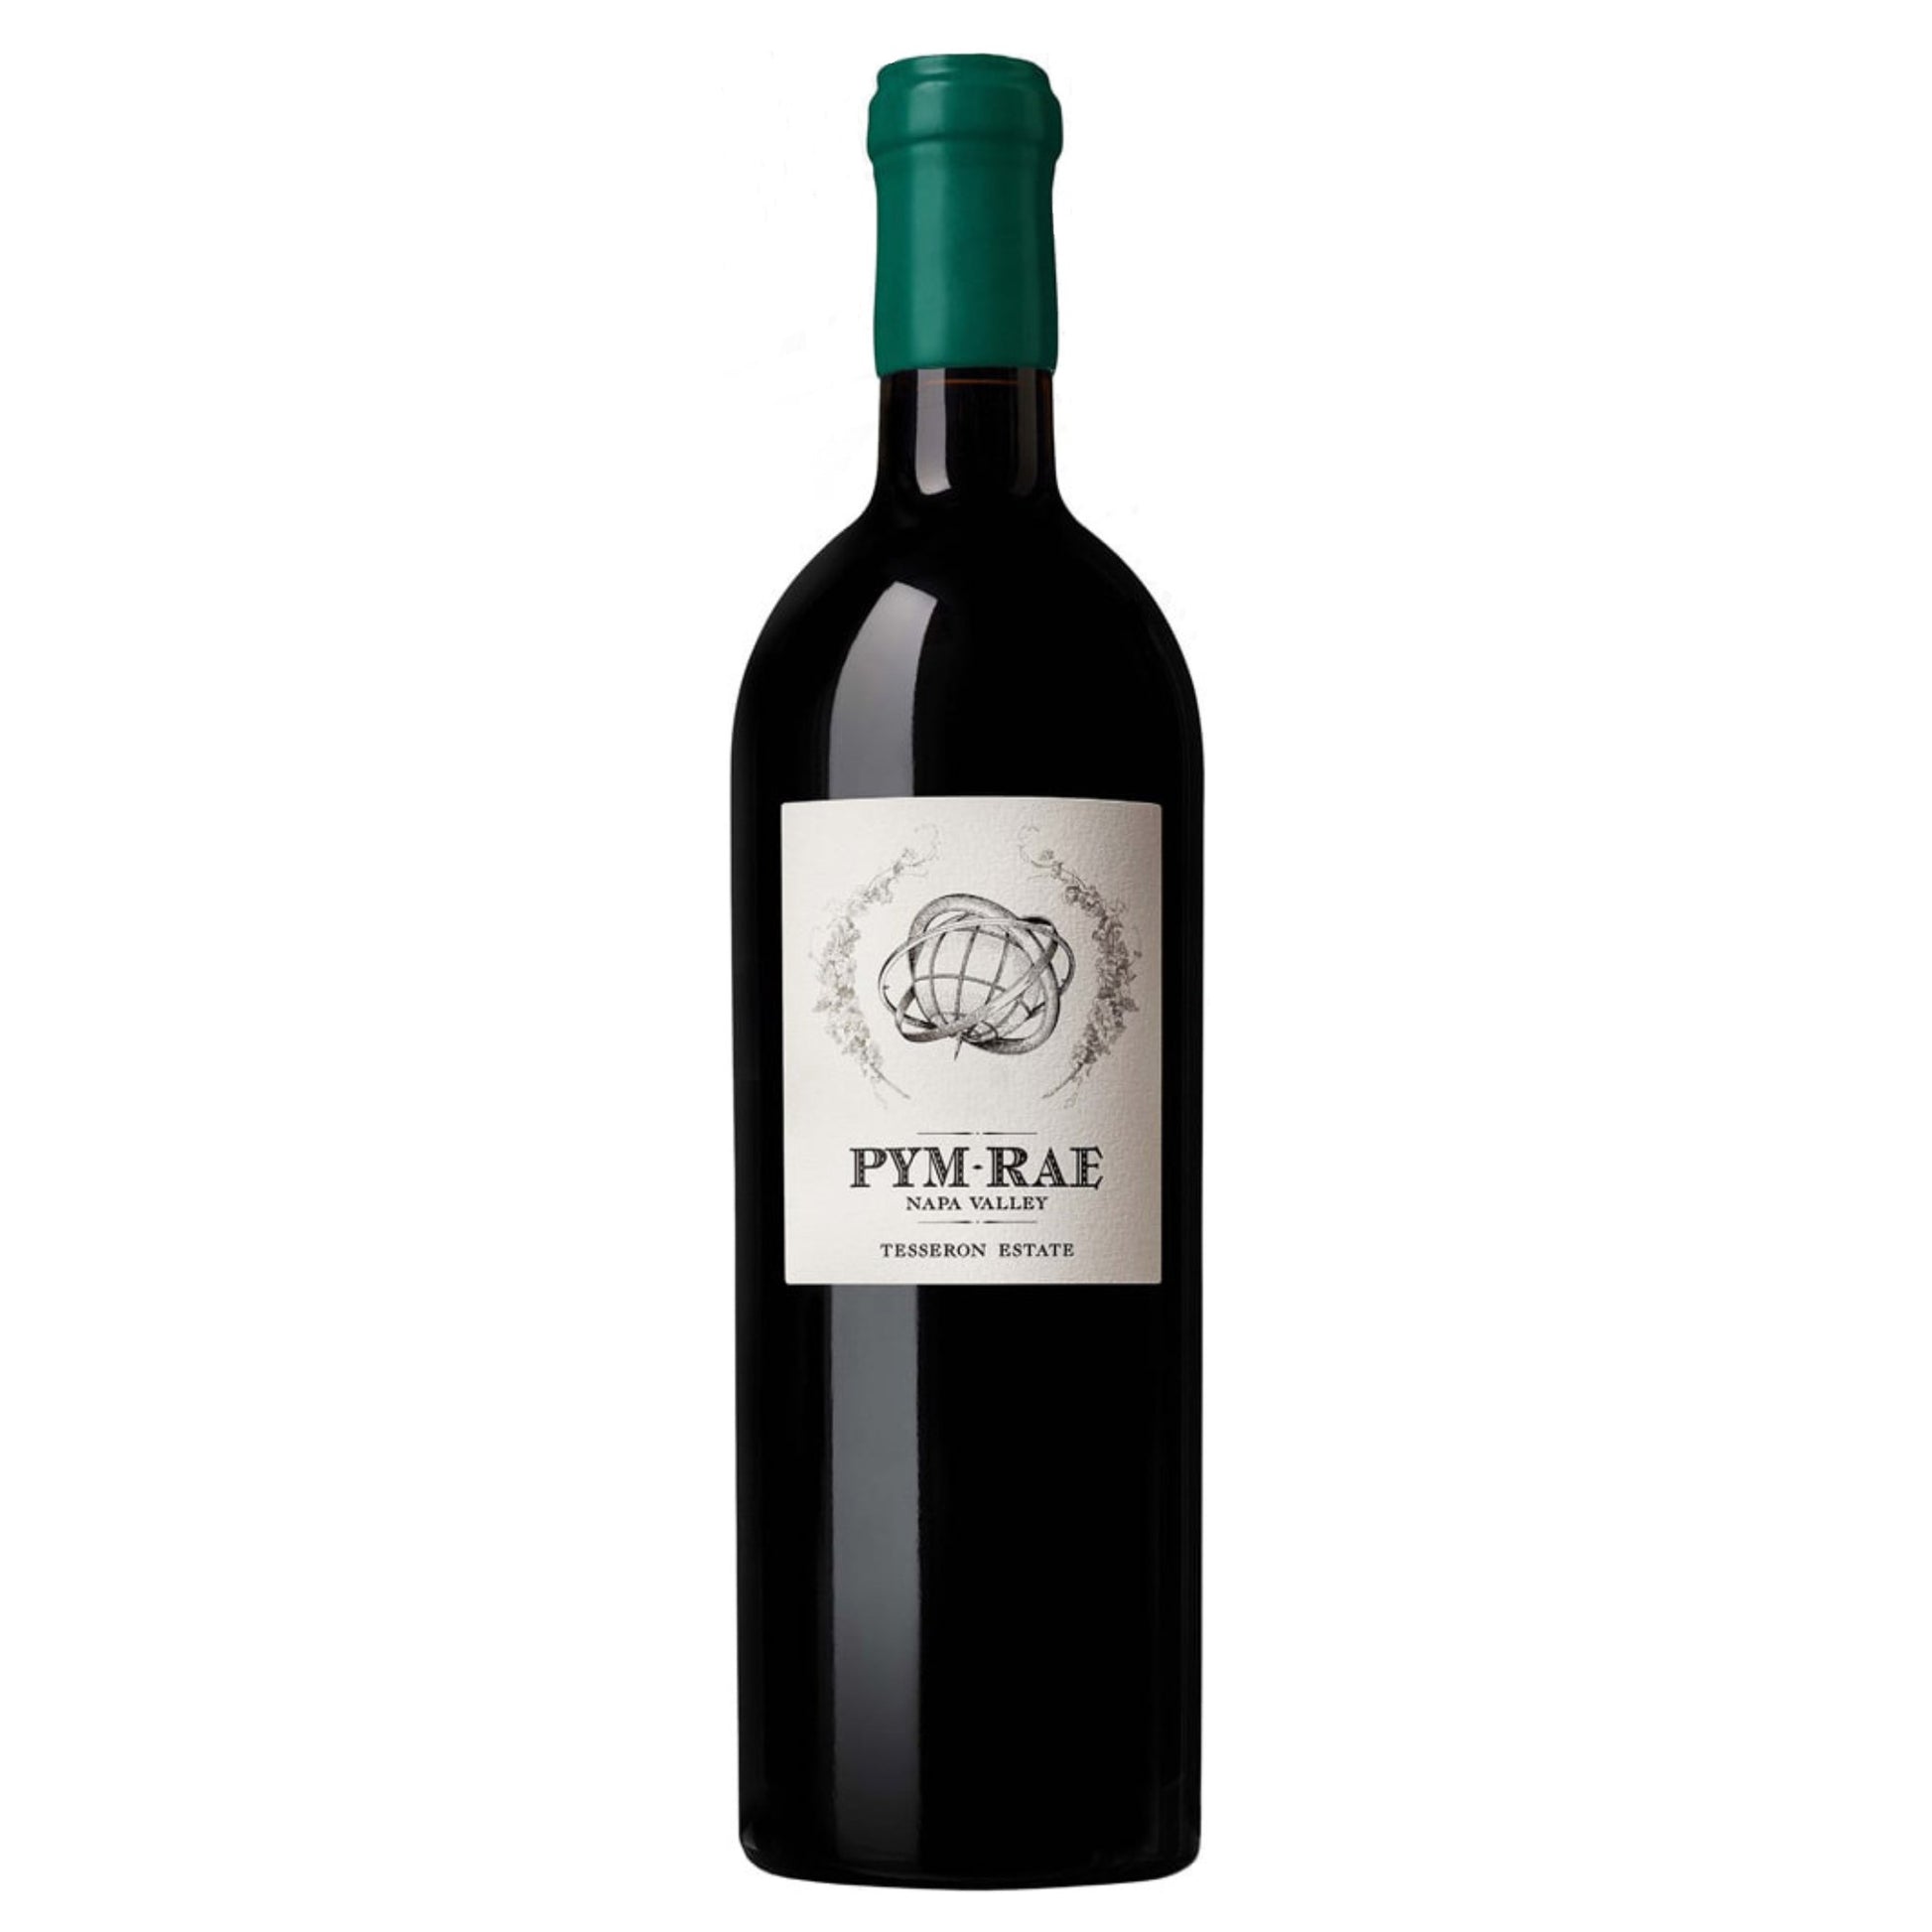 Pym-Rae - Grand Vin Pte Ltd